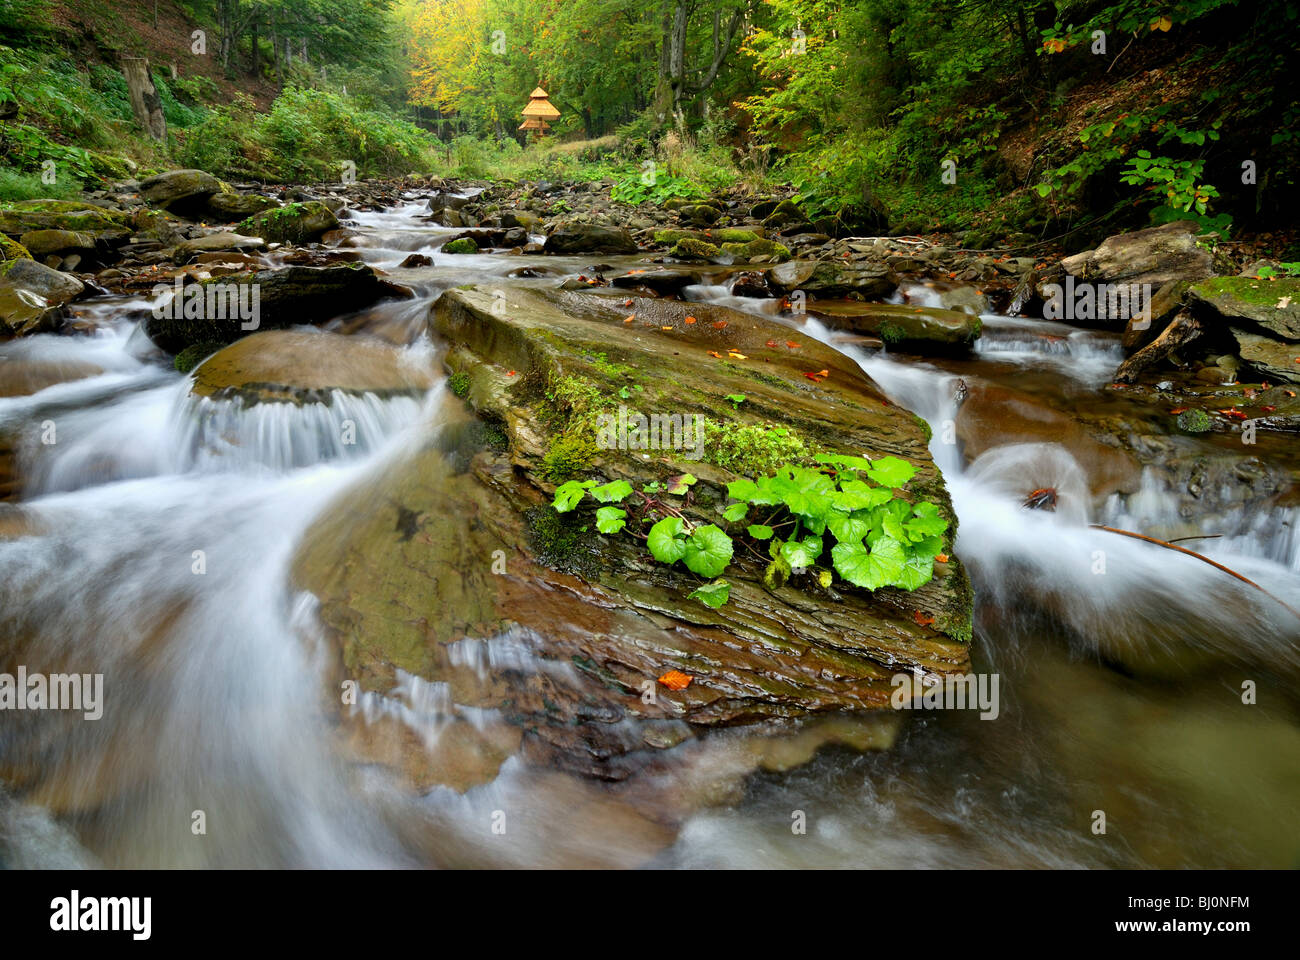 shipot waterfall in zakarpatie region of ukraine Stock Photo